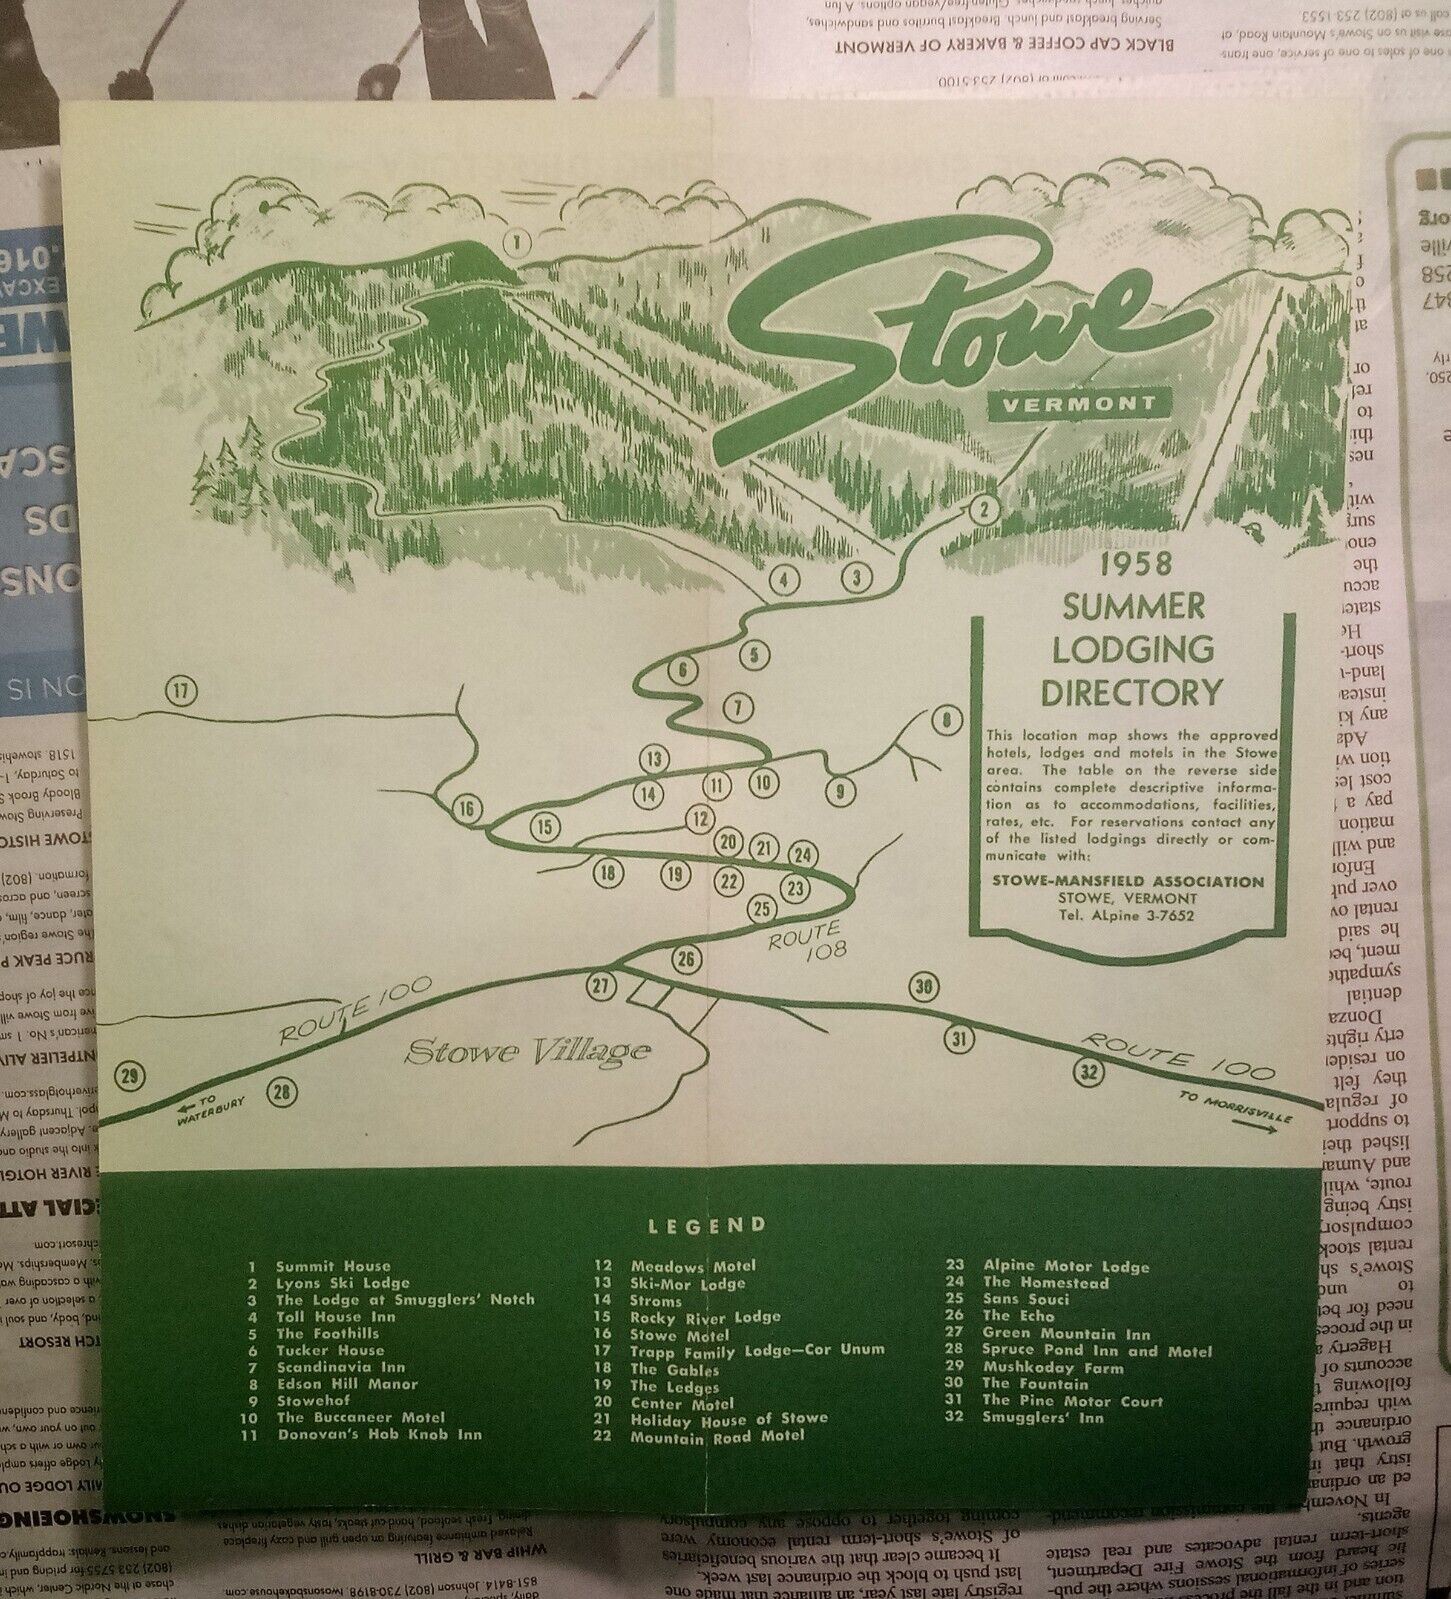 Stowe Vermont 1958 Summer Lodging Directory